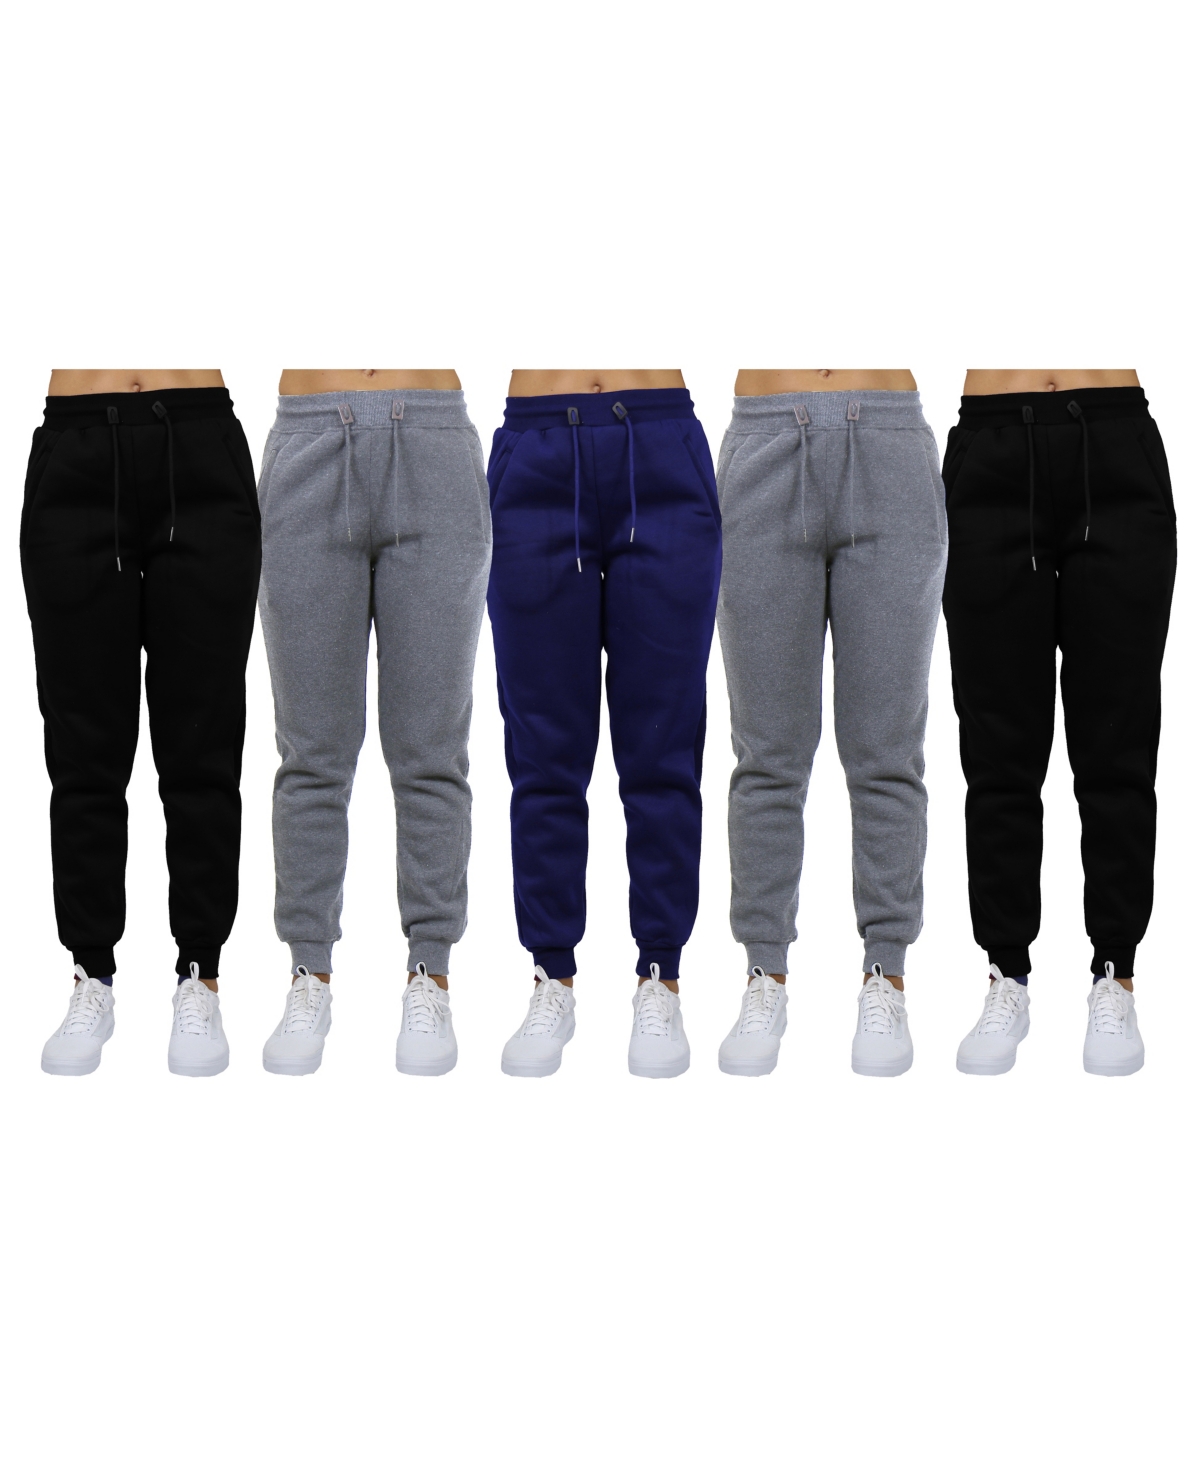 Women's Loose-Fit Fleece Jogger Sweatpants-5 Pack - Black-Charcoal-Navy-Heather Grey-Olive